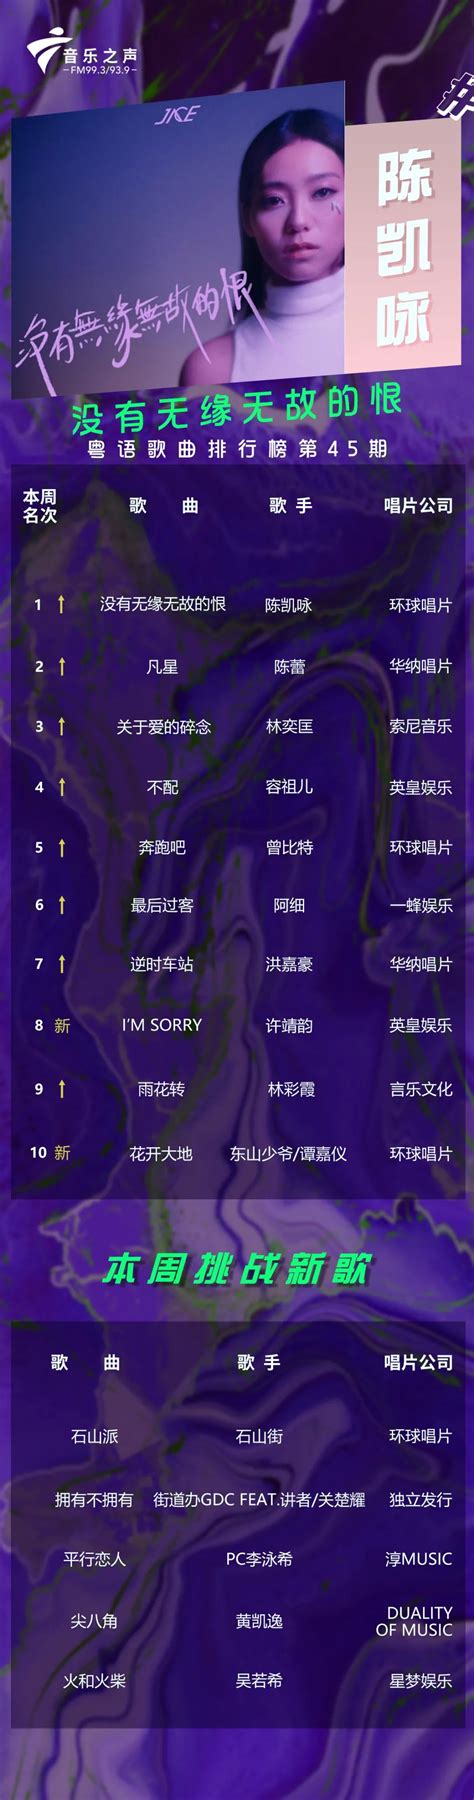 ktv 粤语排行榜_ktv歌曲排行榜海报图片(2)_中国排行网